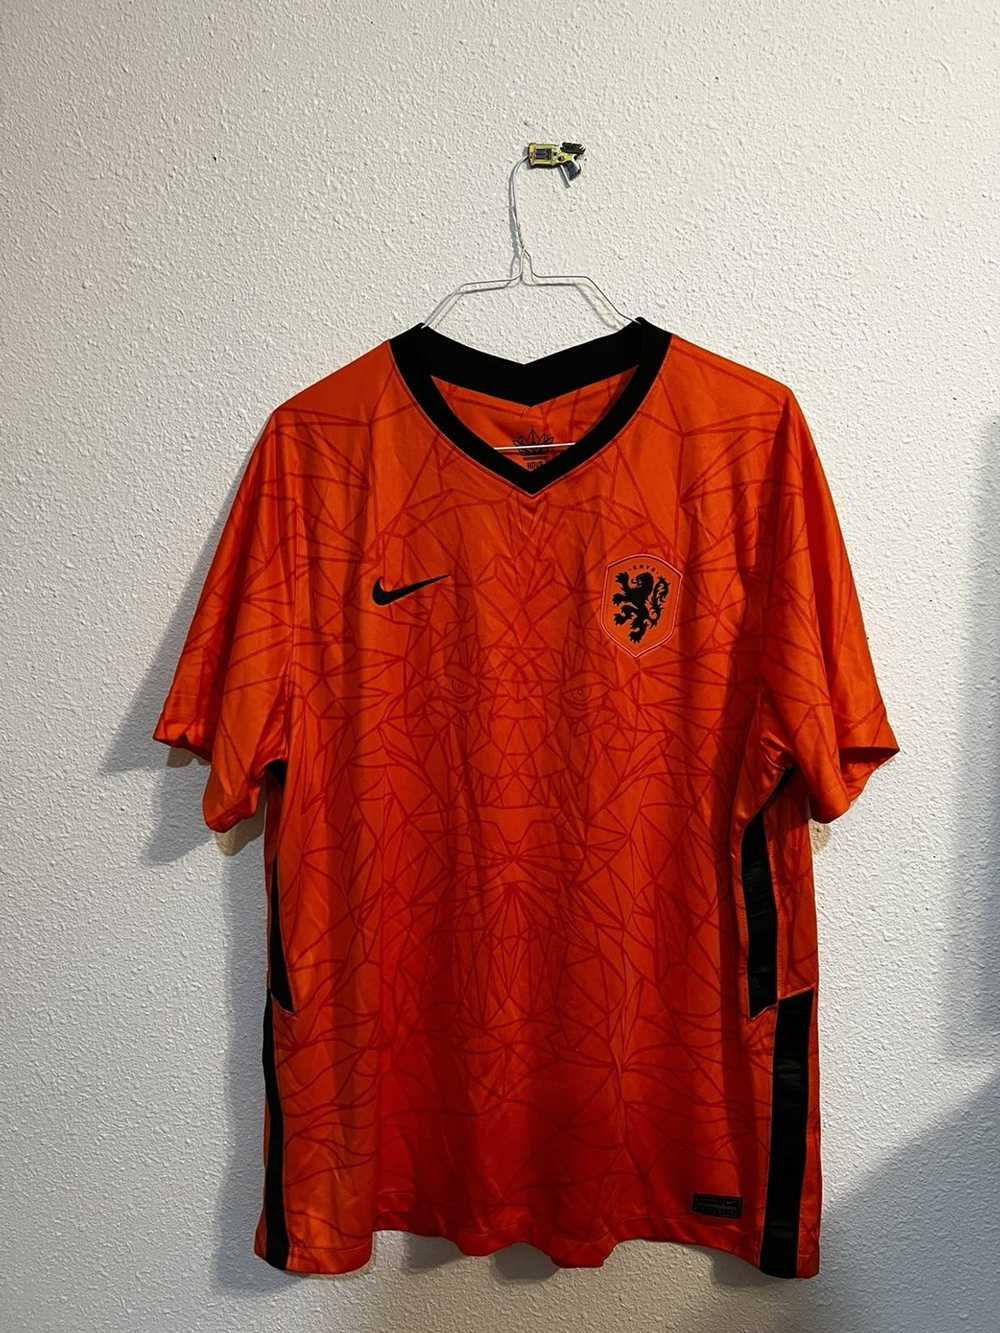 Nike Netherlands/Holland 20-21 home jersey 🇳🇱 - image 1